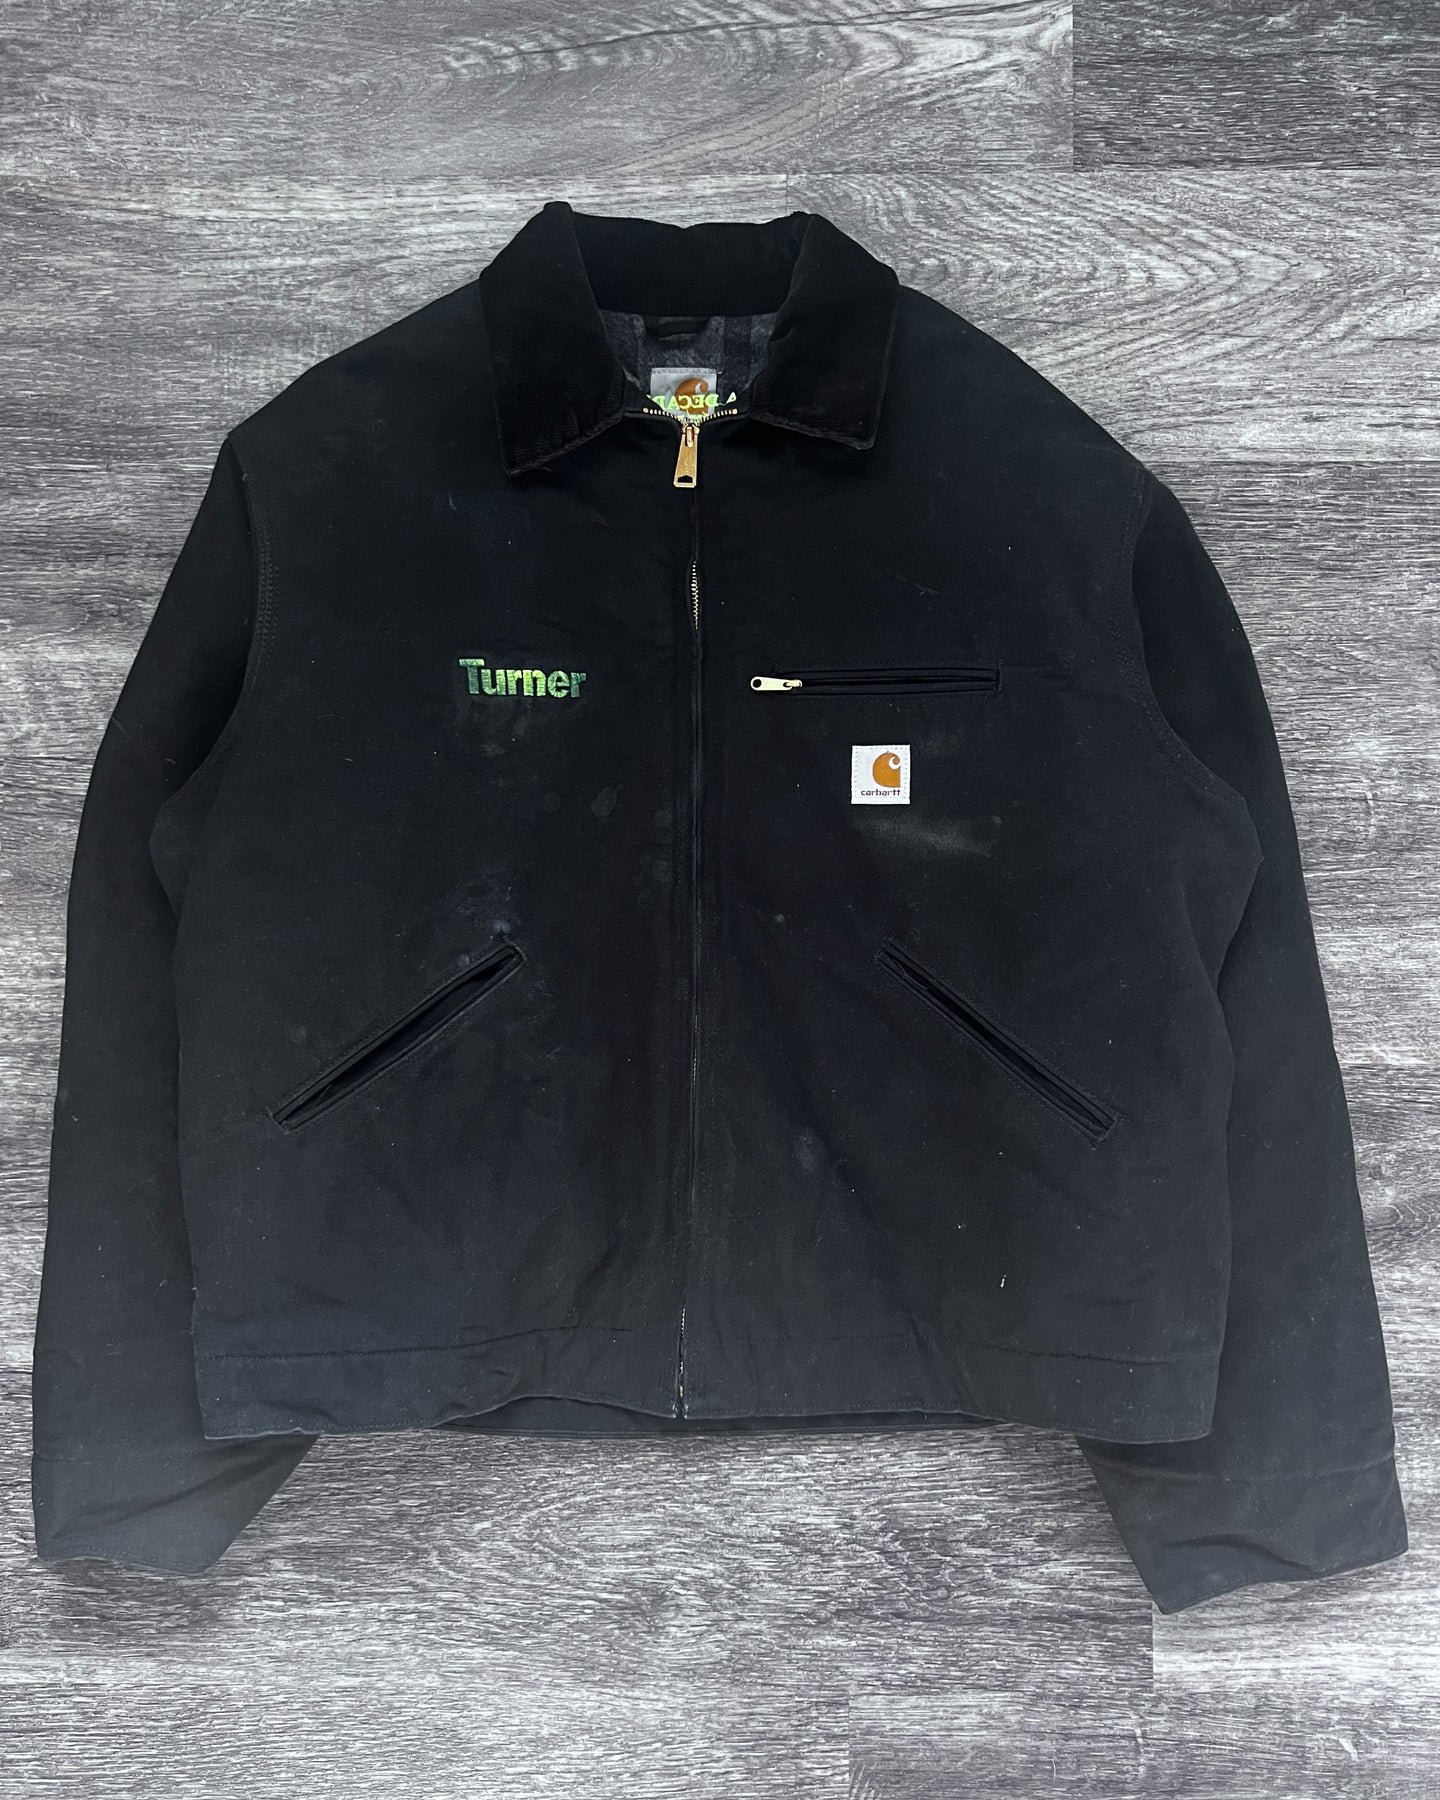 1990s Carhartt Turner Detroit Jacket - Size X-Large